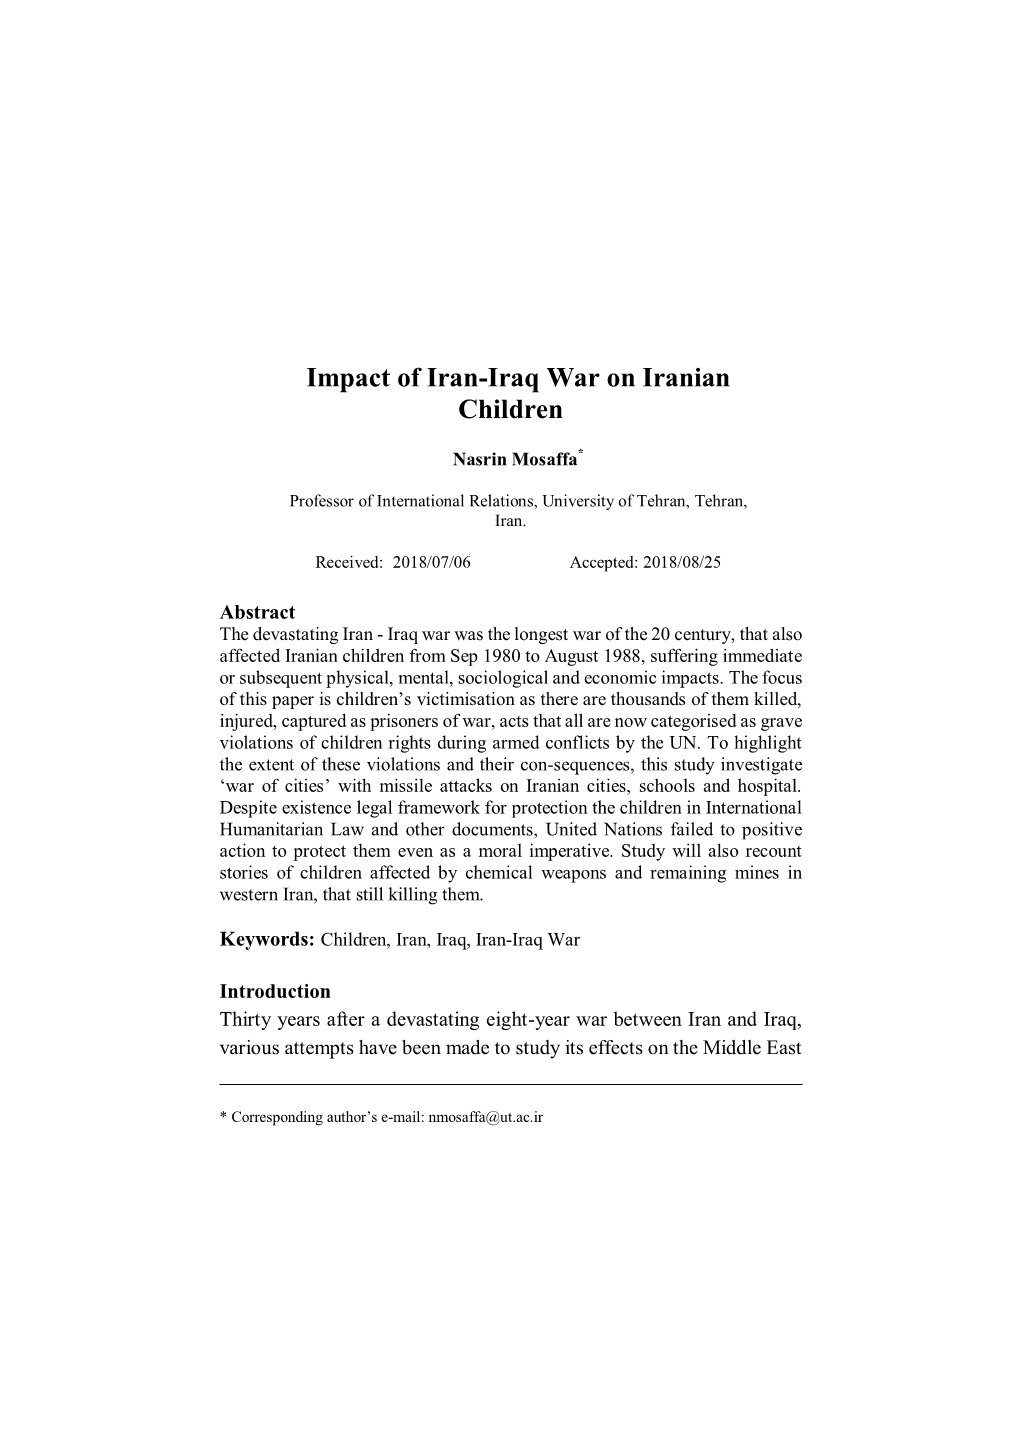 Impact of Iran-Iraq War on Iranian Children